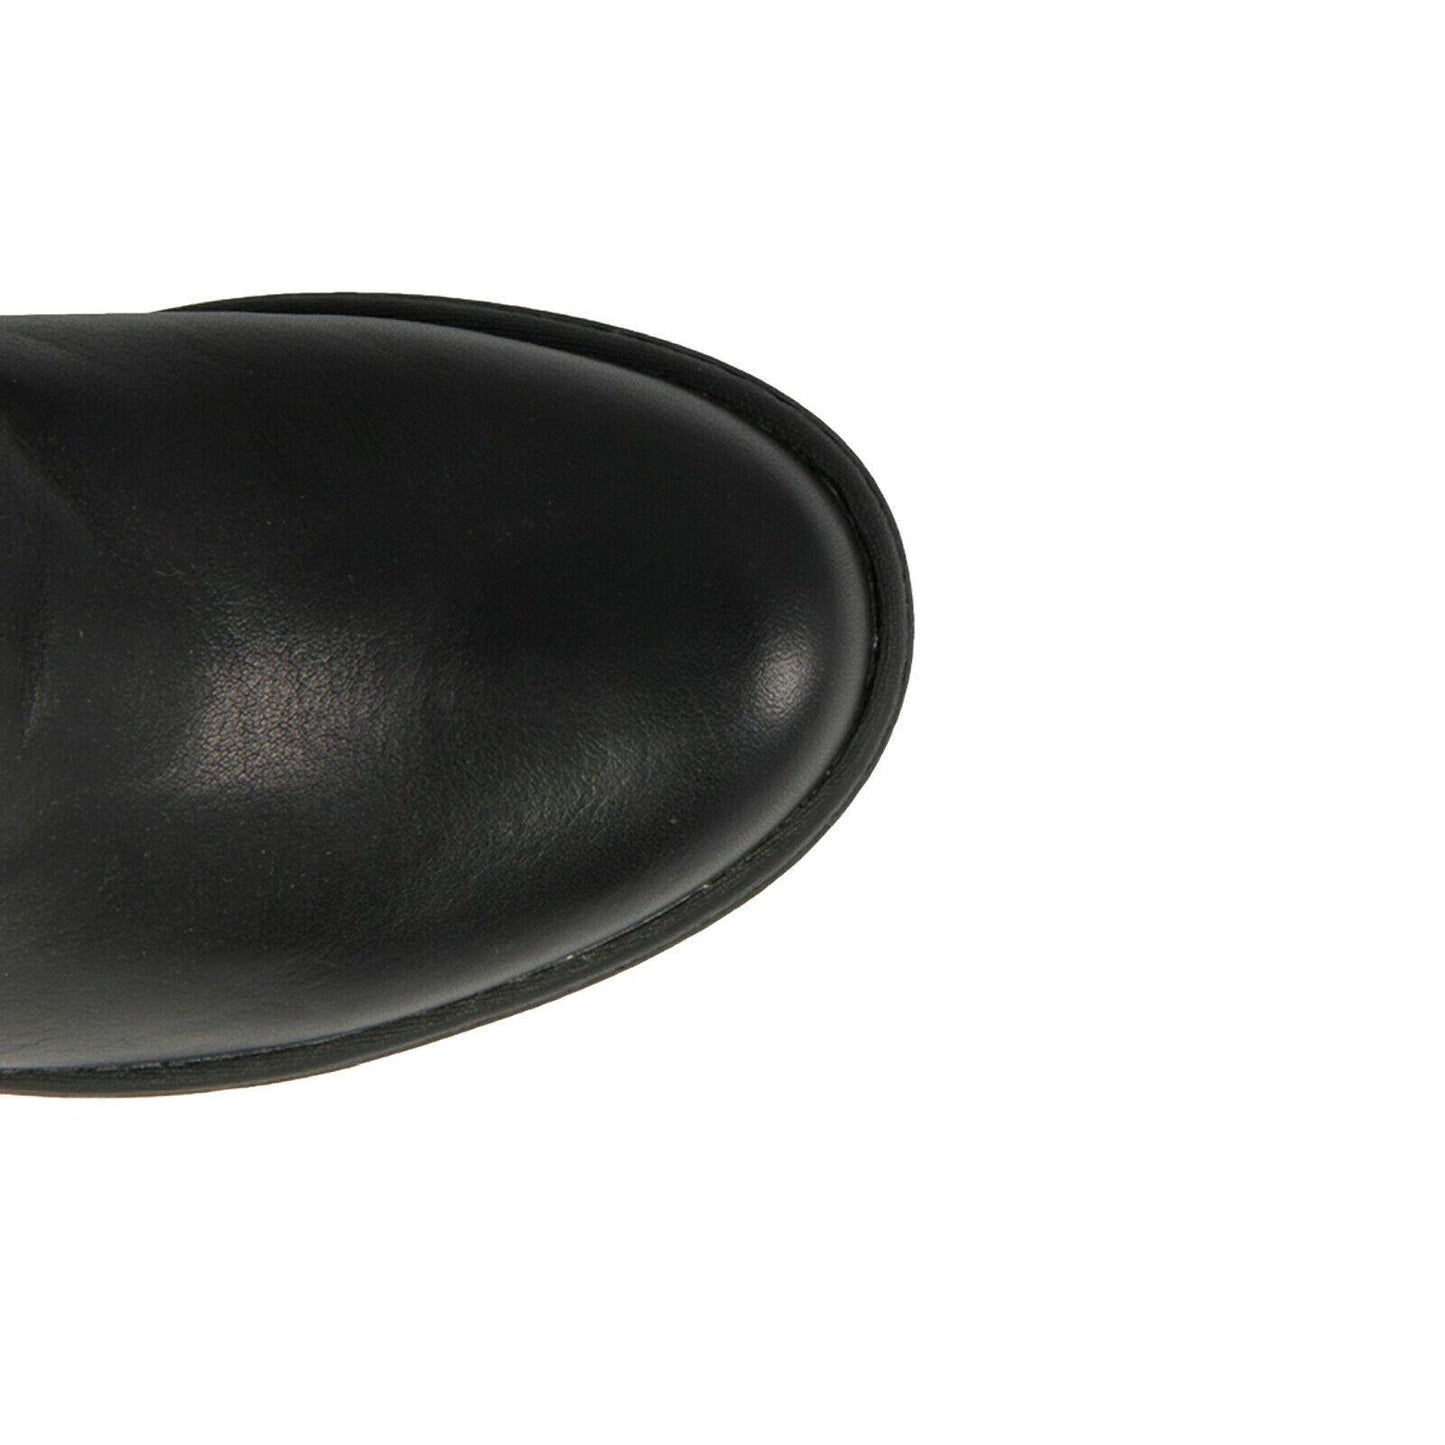 Ladies Bogs Kristina Tall Black Leather Waterproof Slip Resistant Boots 71701